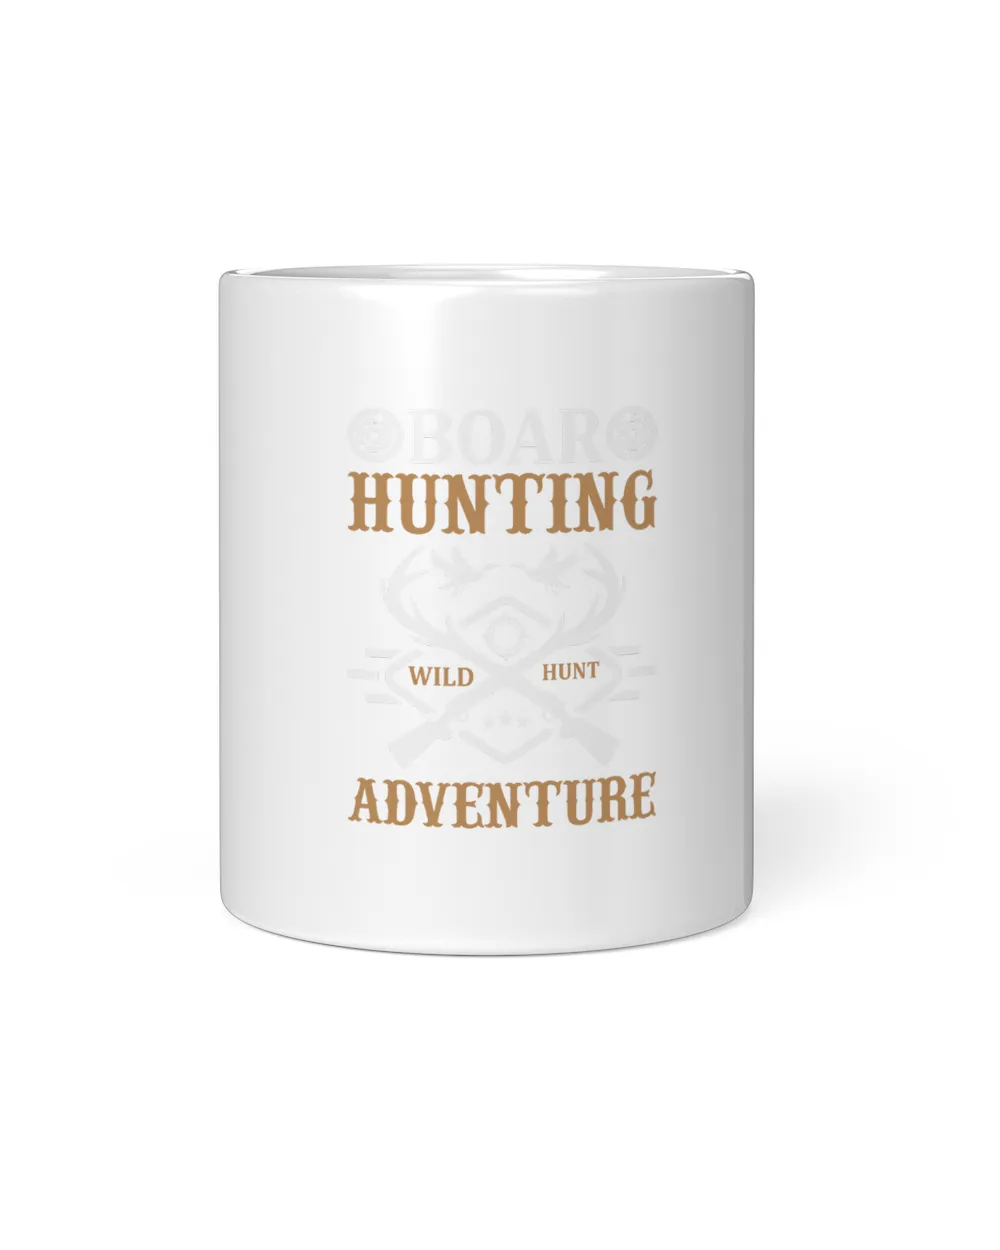 Boar Hunting Wild Hunt Adventure